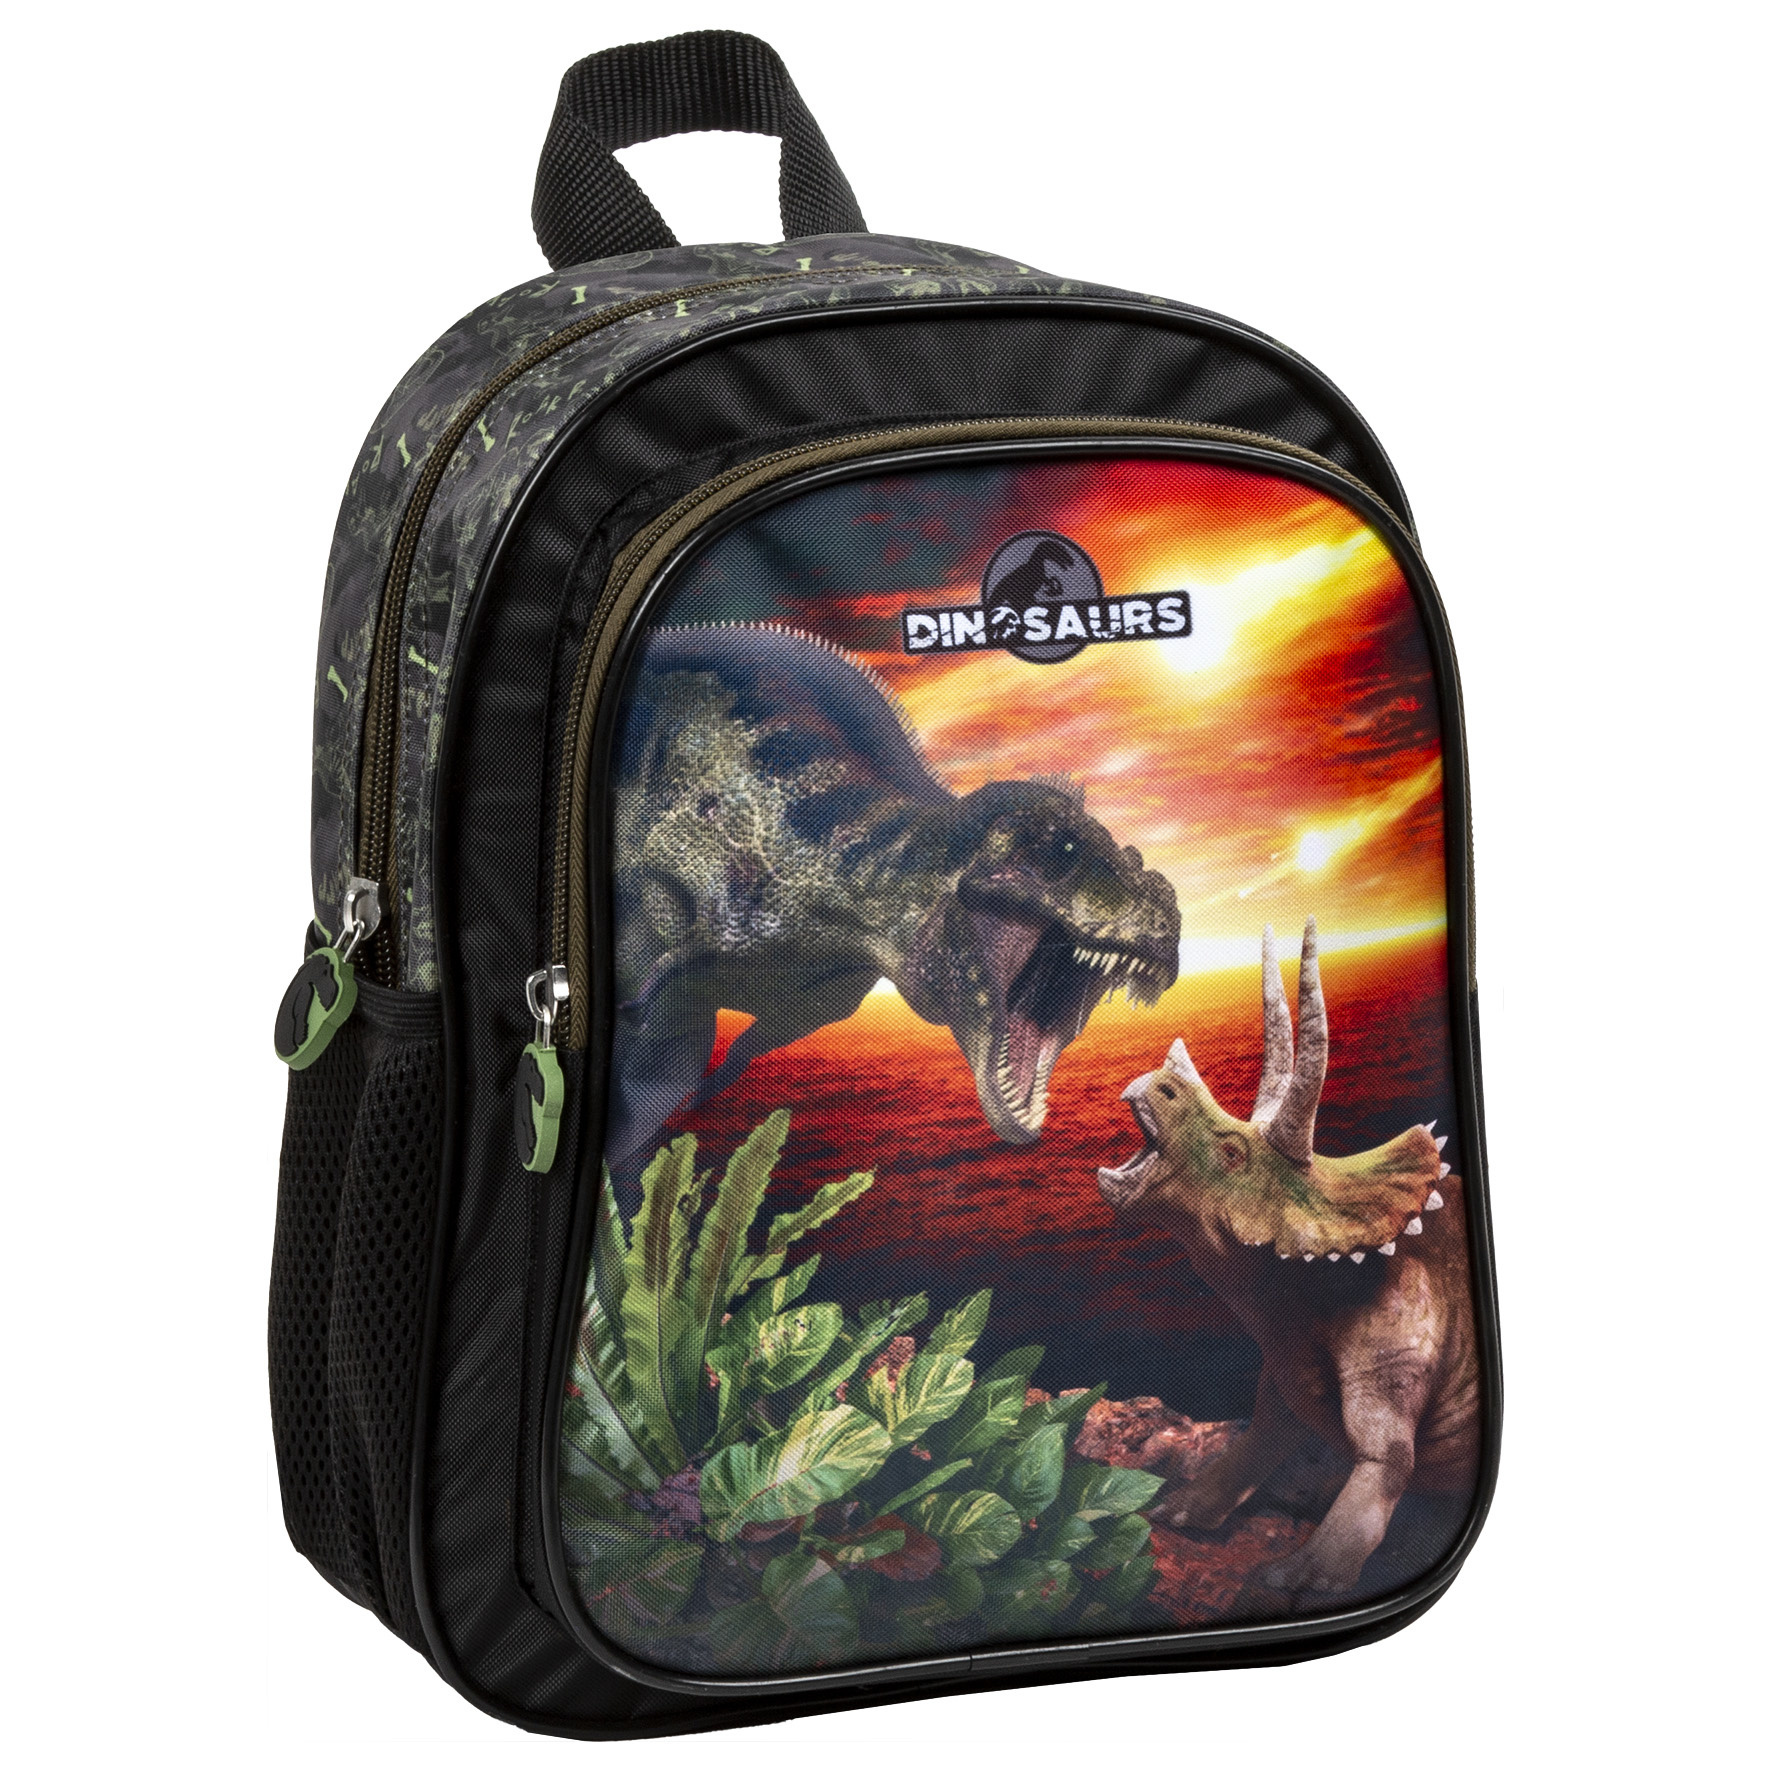 Dinosaurus Toddler backpack, Scream - 29 x 23 x 10 cm - Polyester